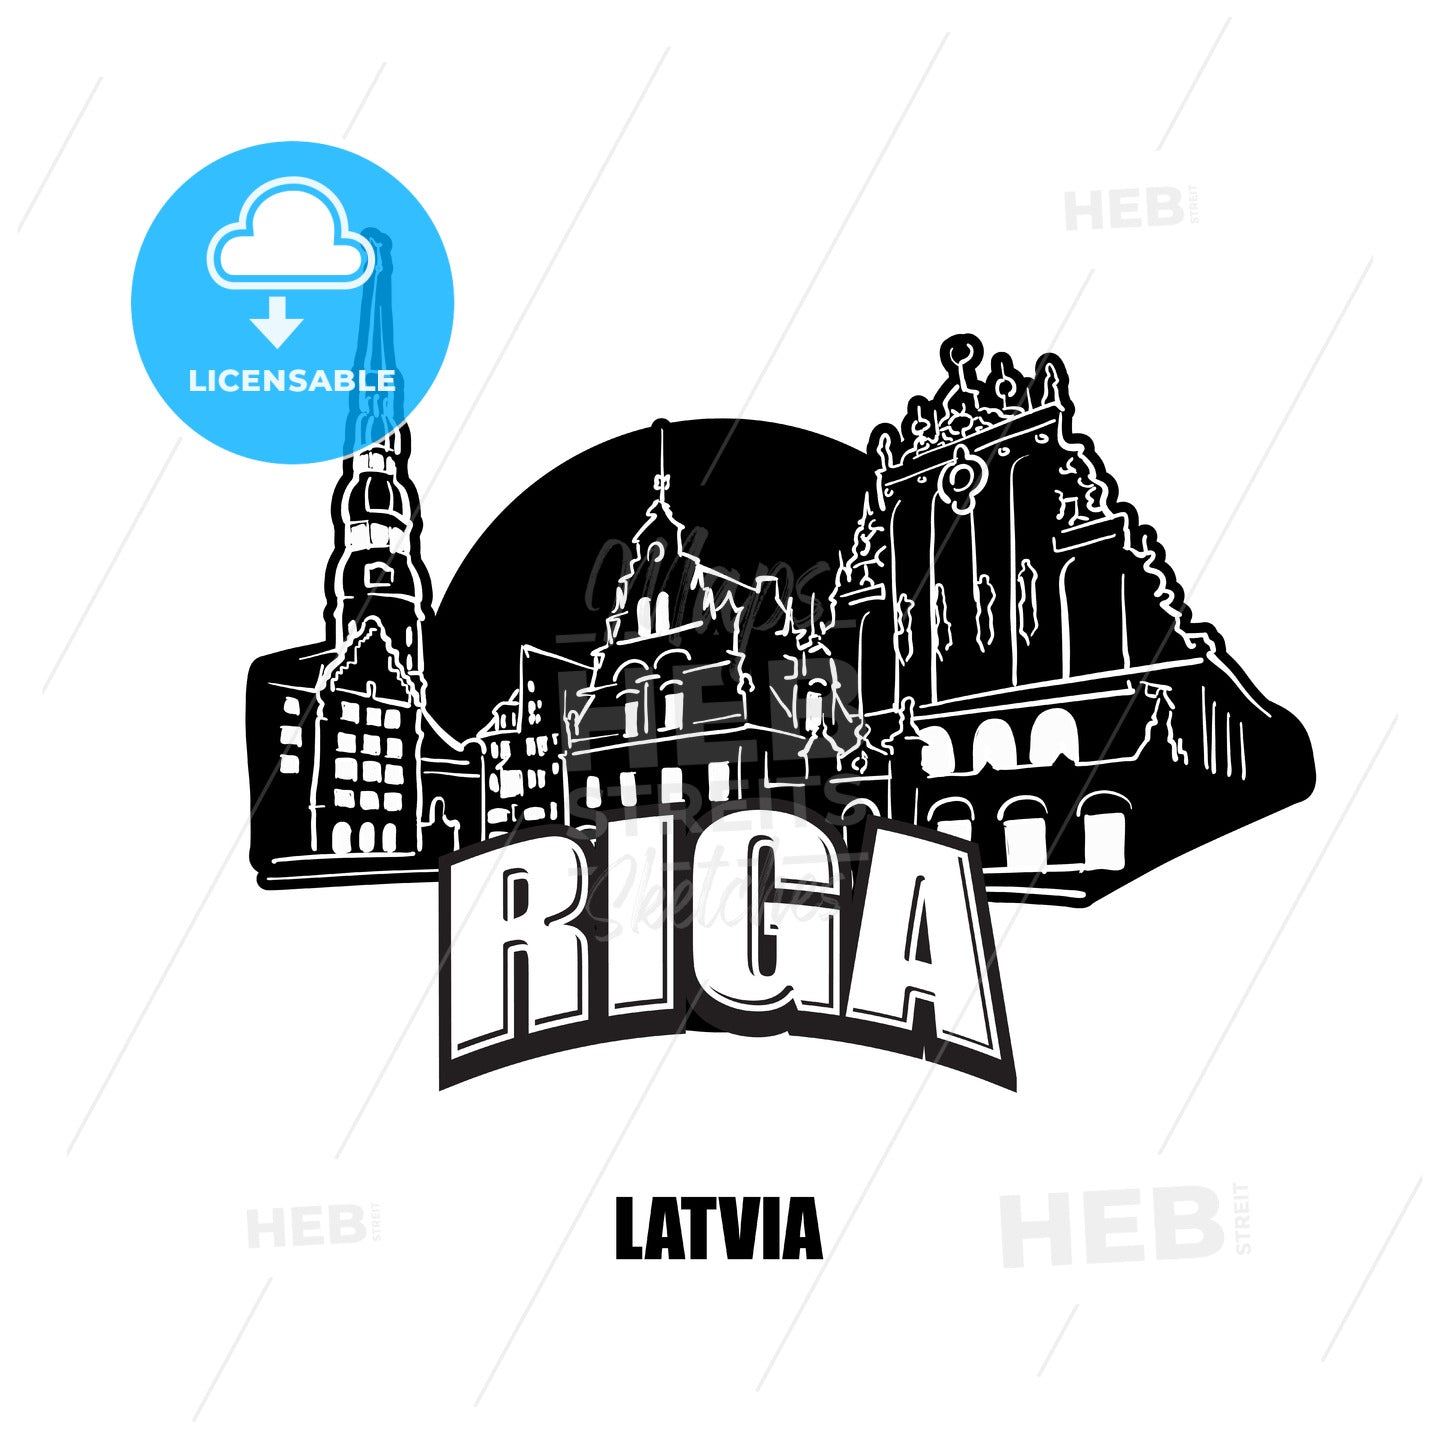 Riga, Lativa, black and white logo – instant download